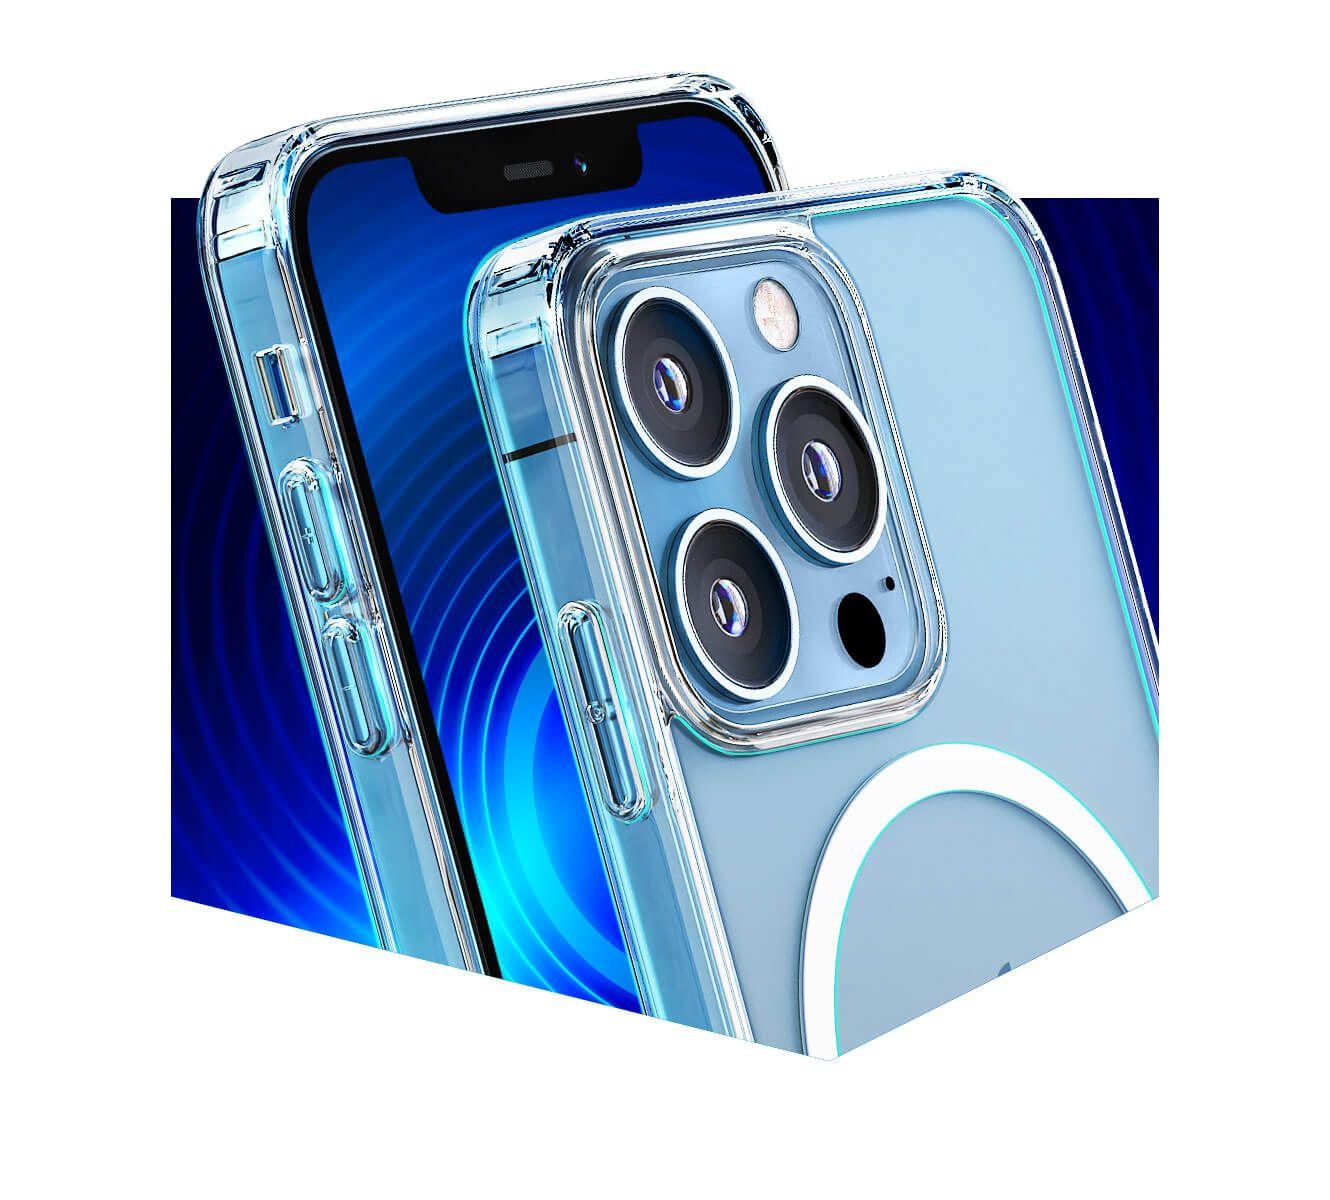 3mk MagSafe Mag Case - iPhone 12 Pro Max